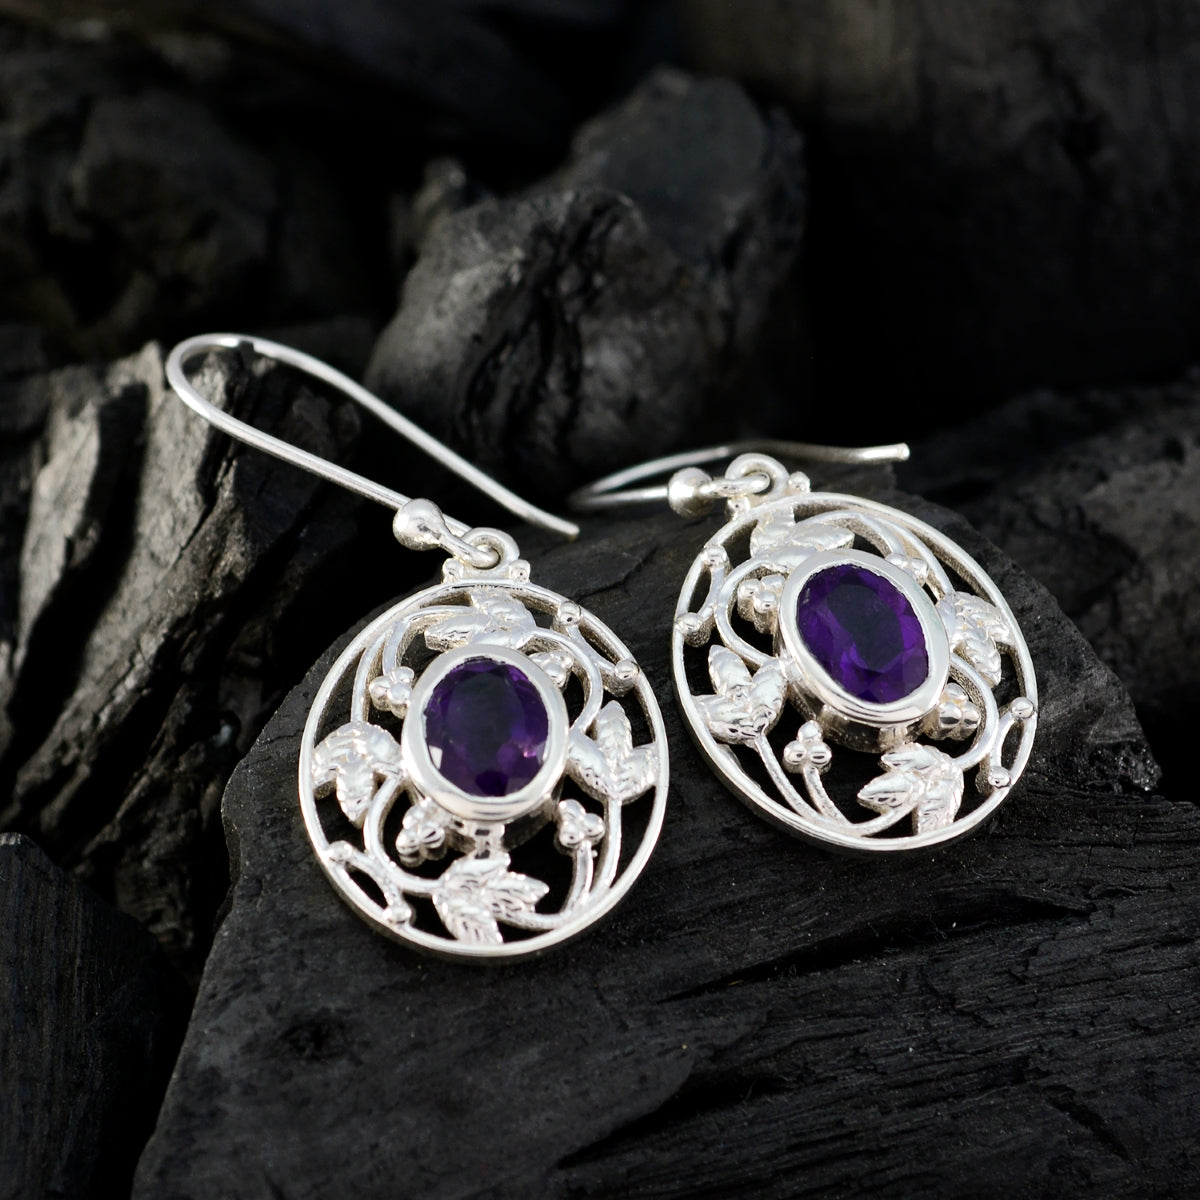 Riyo Nice Gemstone round Faceted Purple Amethyst Silver Earring gift for anniversary